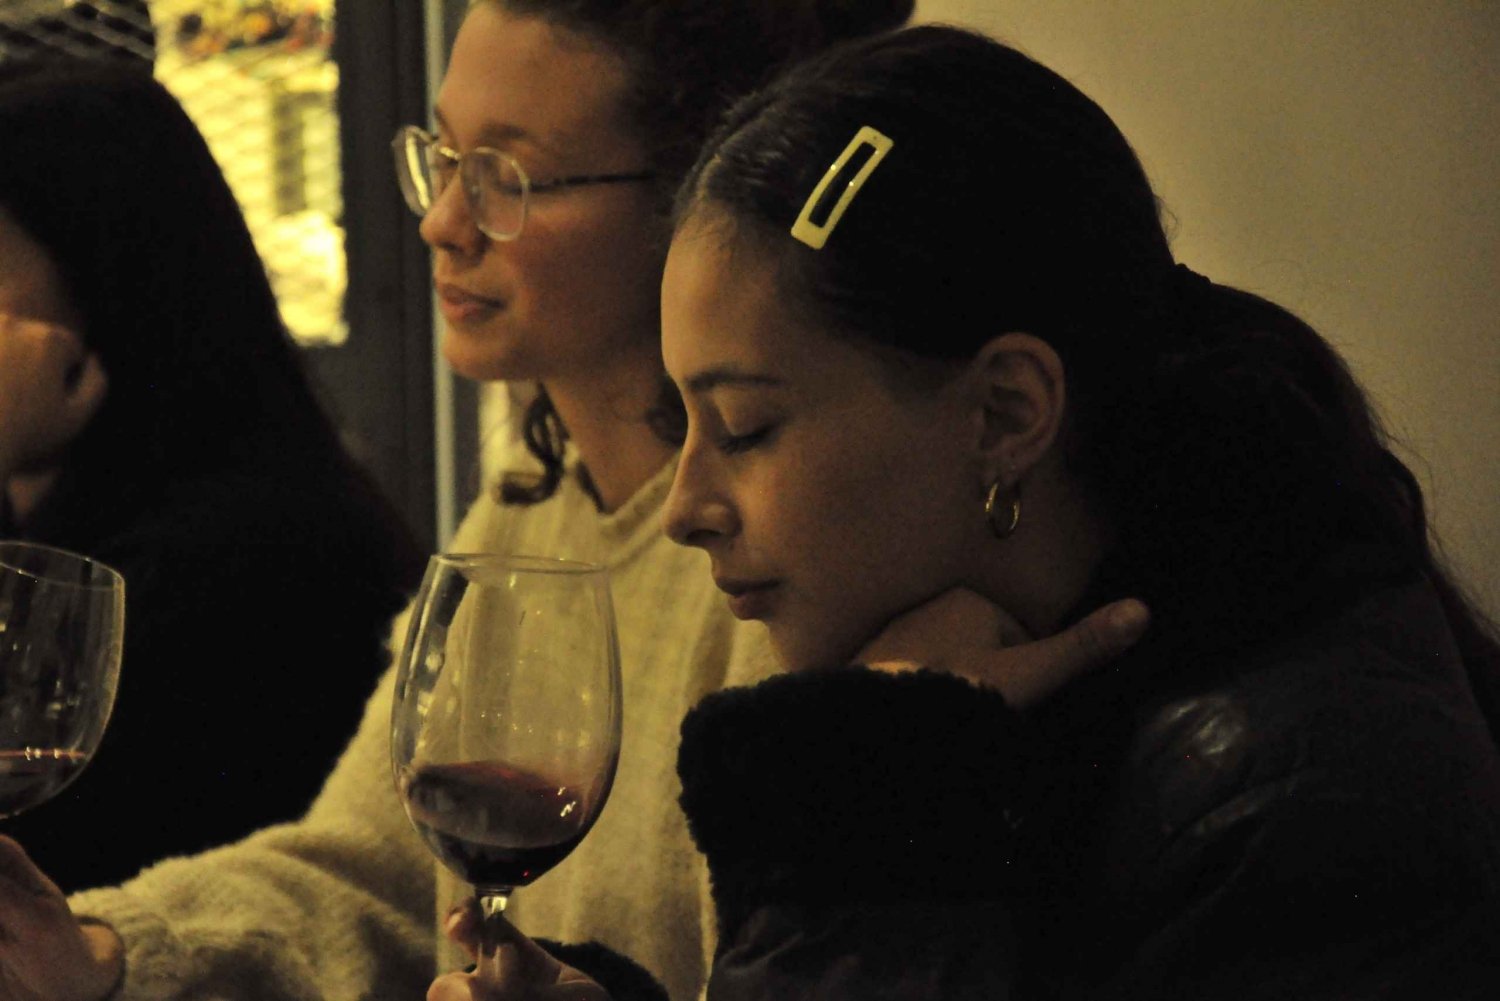 Mendoza: Premium wijnproeverij